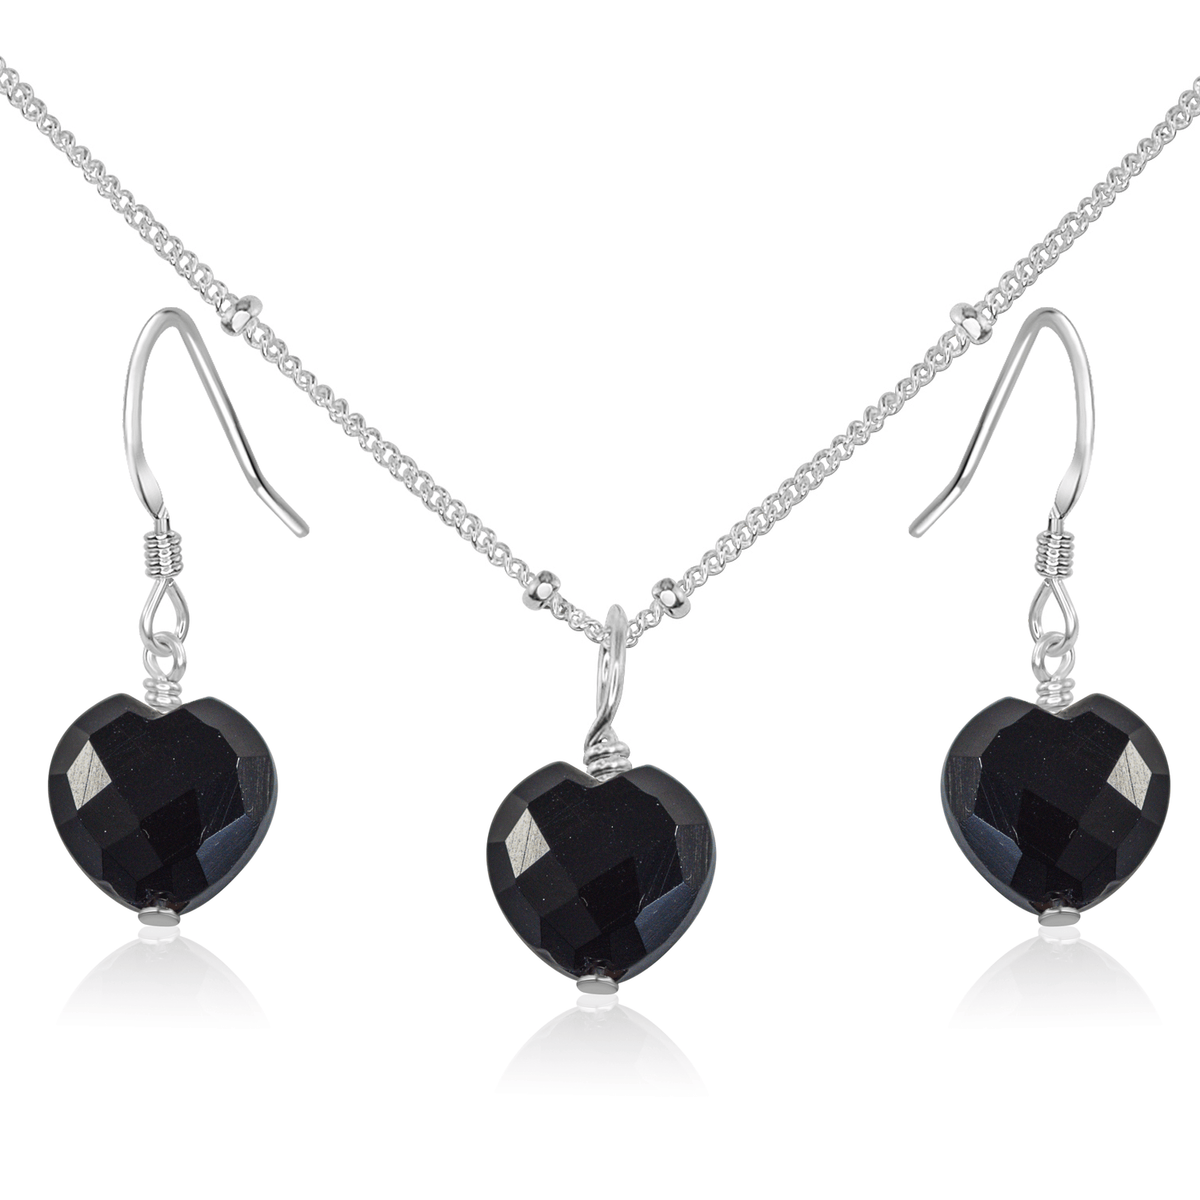 Black Onyx Crystal Heart Jewellery Set - Black Onyx Crystal Heart Jewellery Set - Sterling Silver / Satellite / Necklace & Earrings - Luna Tide Handmade Crystal Jewellery